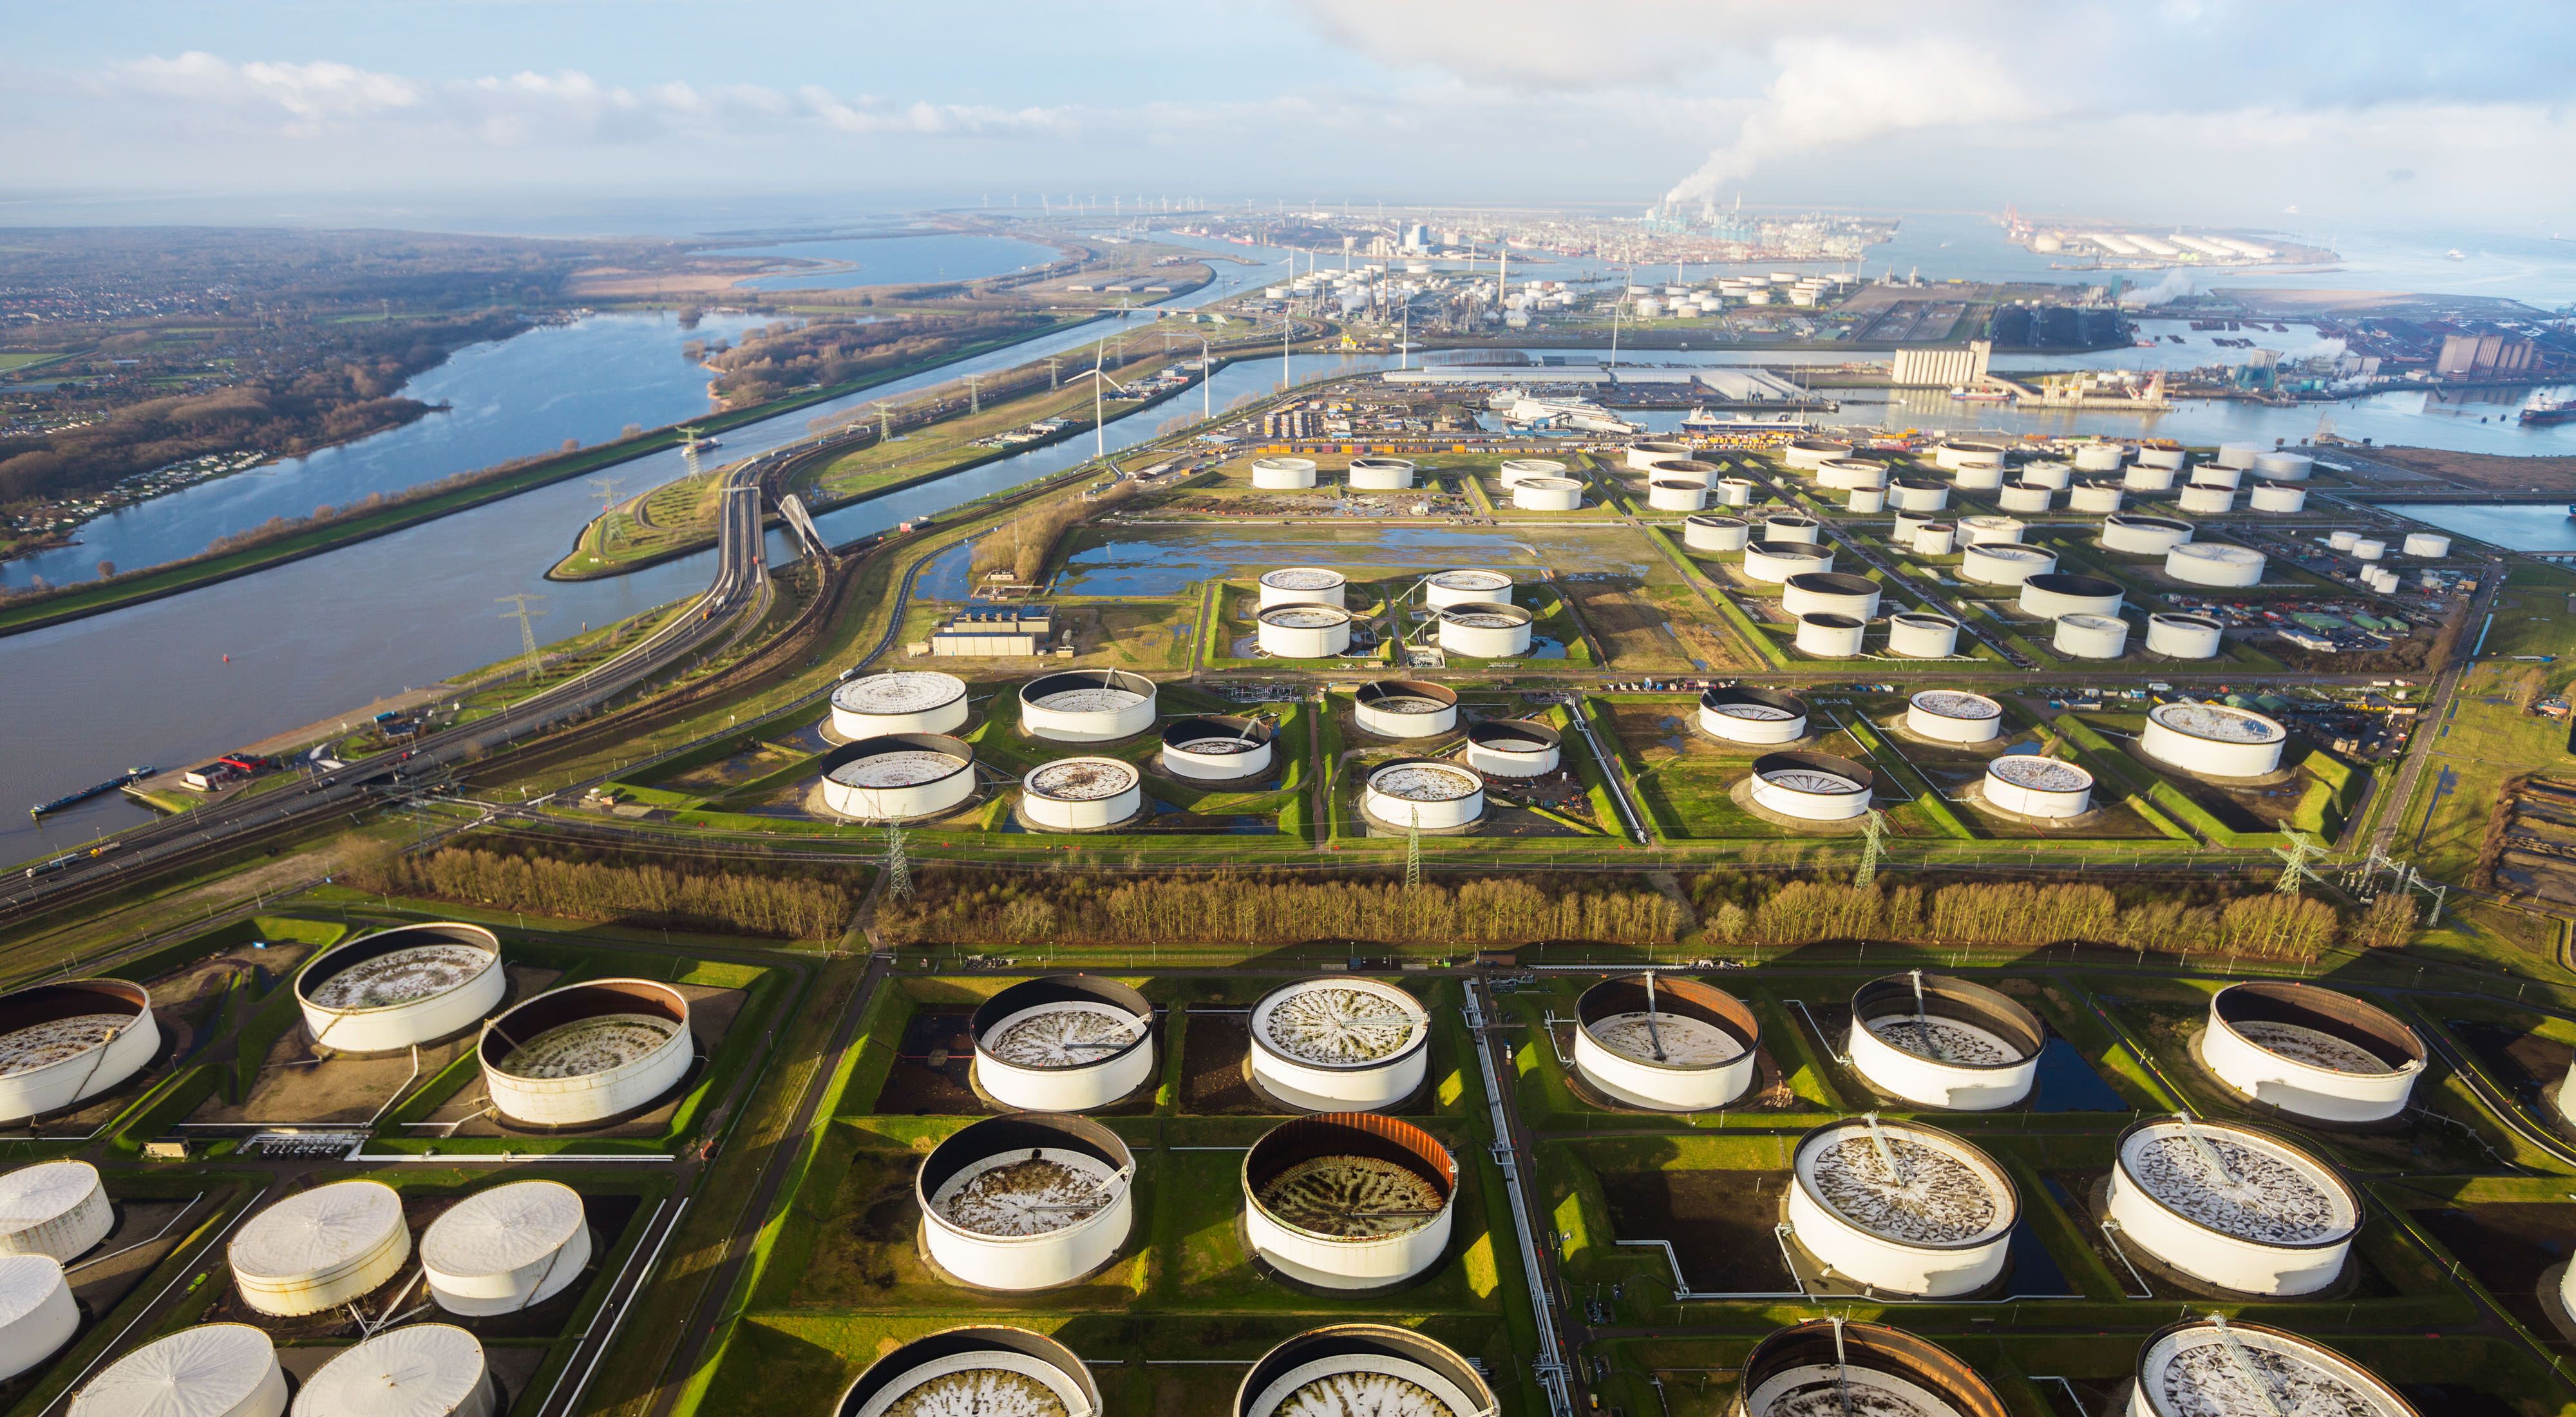 Petroleum storage at the Port of Rotterdam.